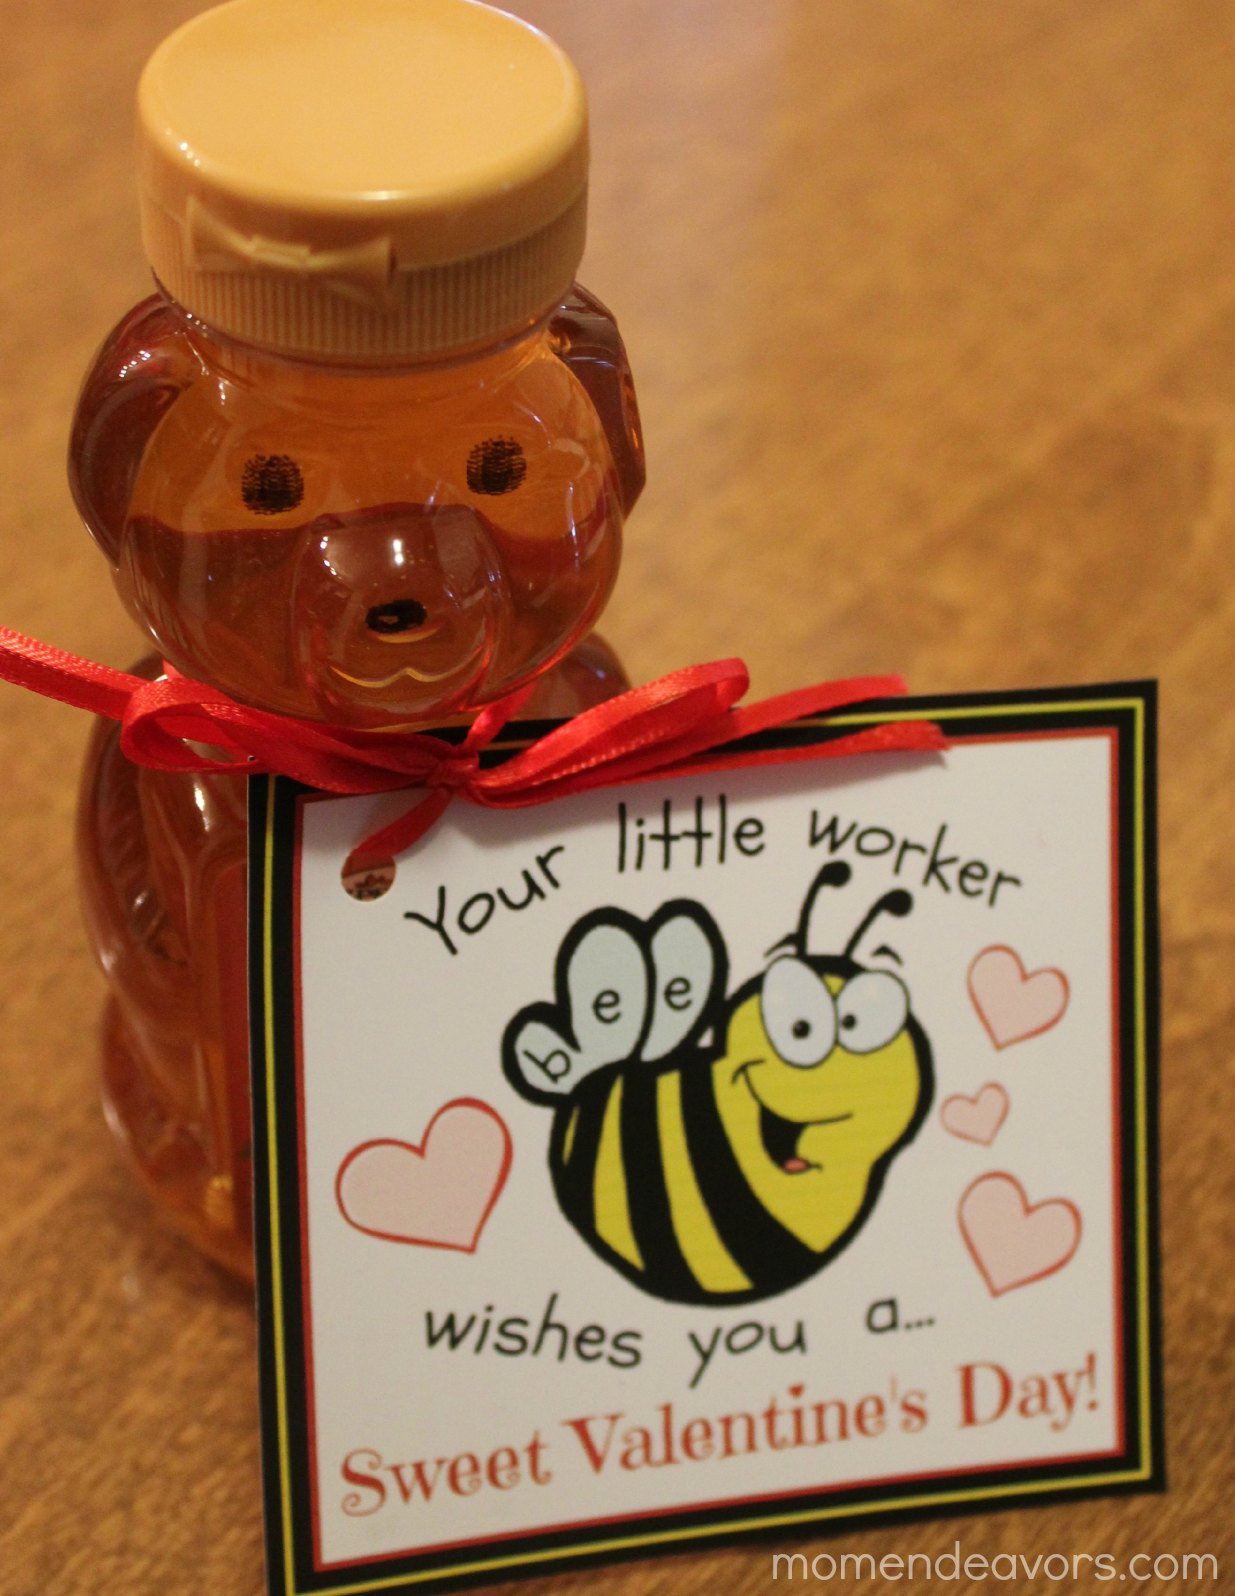 Teacher Valentine Gift Ideas
 Bee themed Teacher Valentine’s Gift